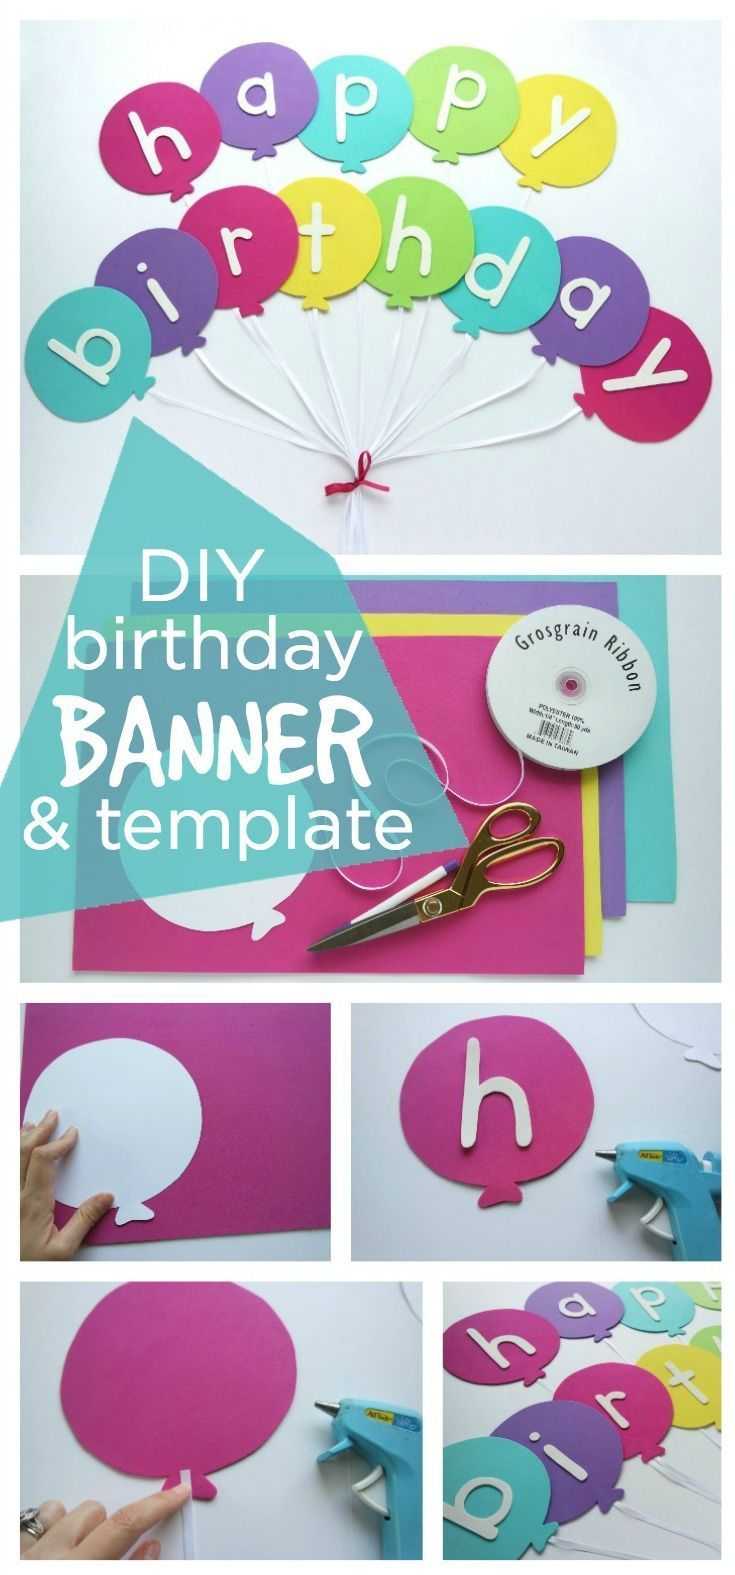 Happy Birthday Banner Diy Template | Birthday Banner For Diy Birthday Banner Template